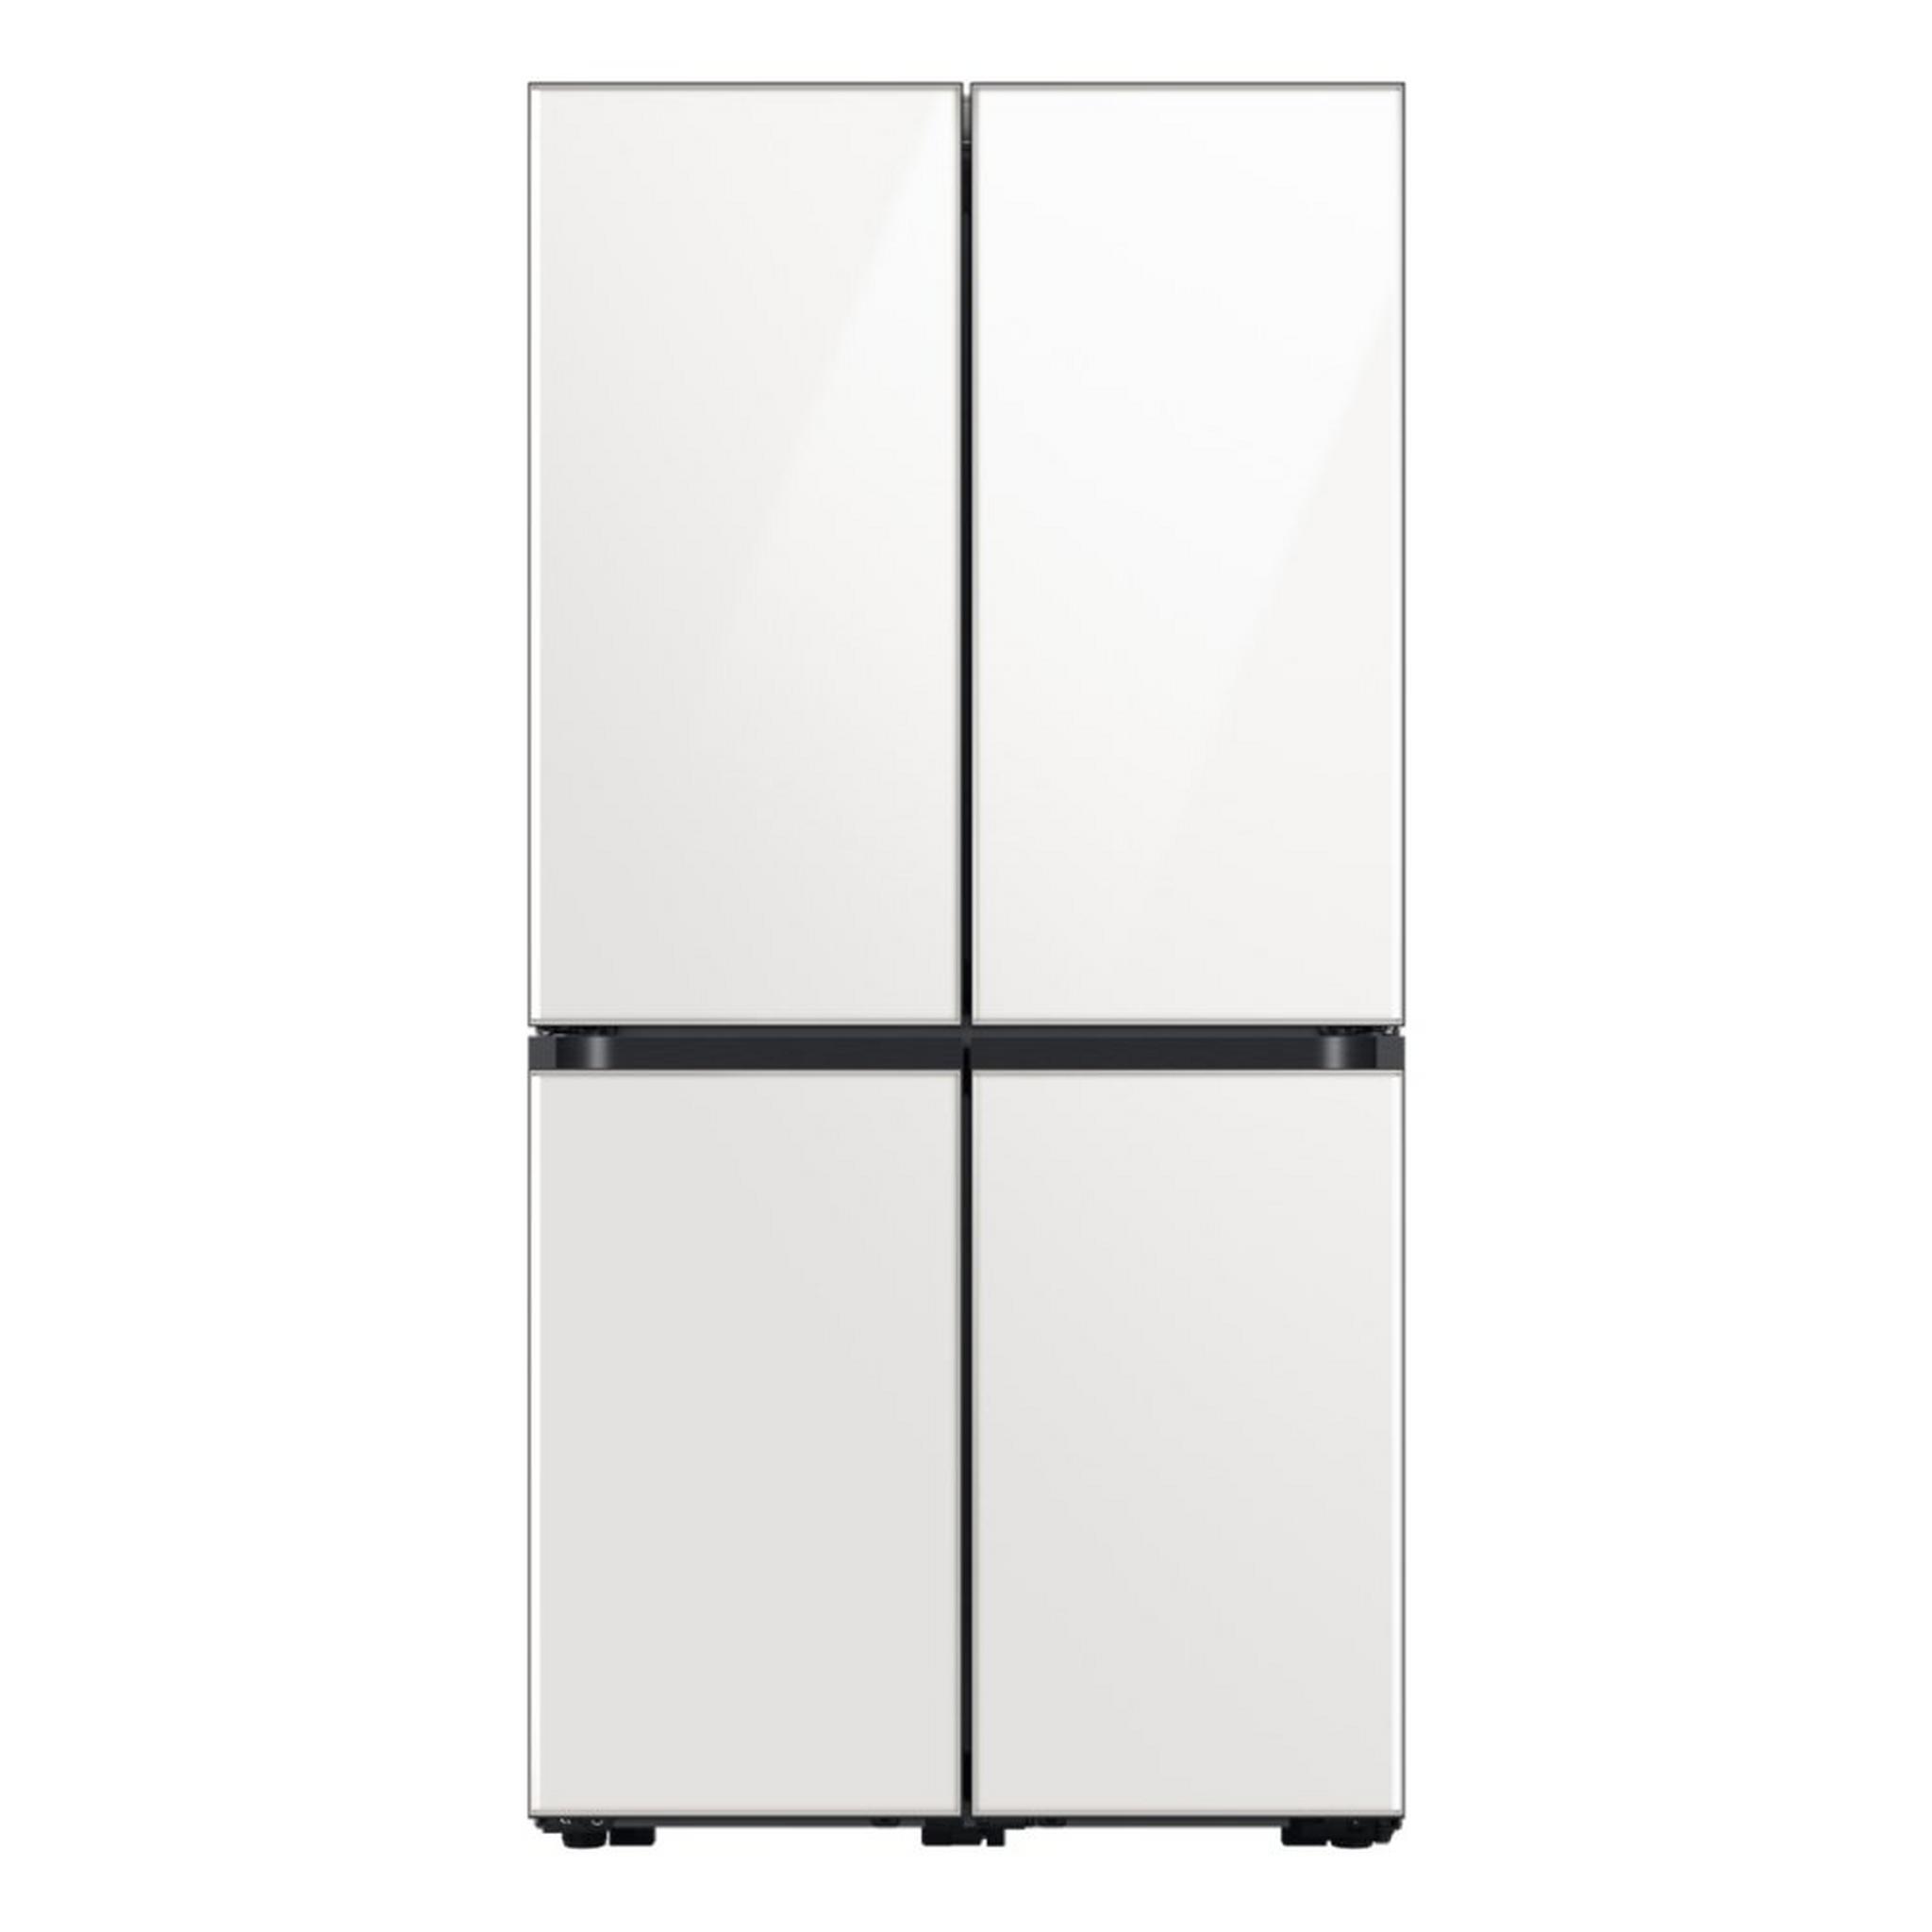 Samsung 32 CFT Refrigerator Four Door (RF85A9111AP) Silver